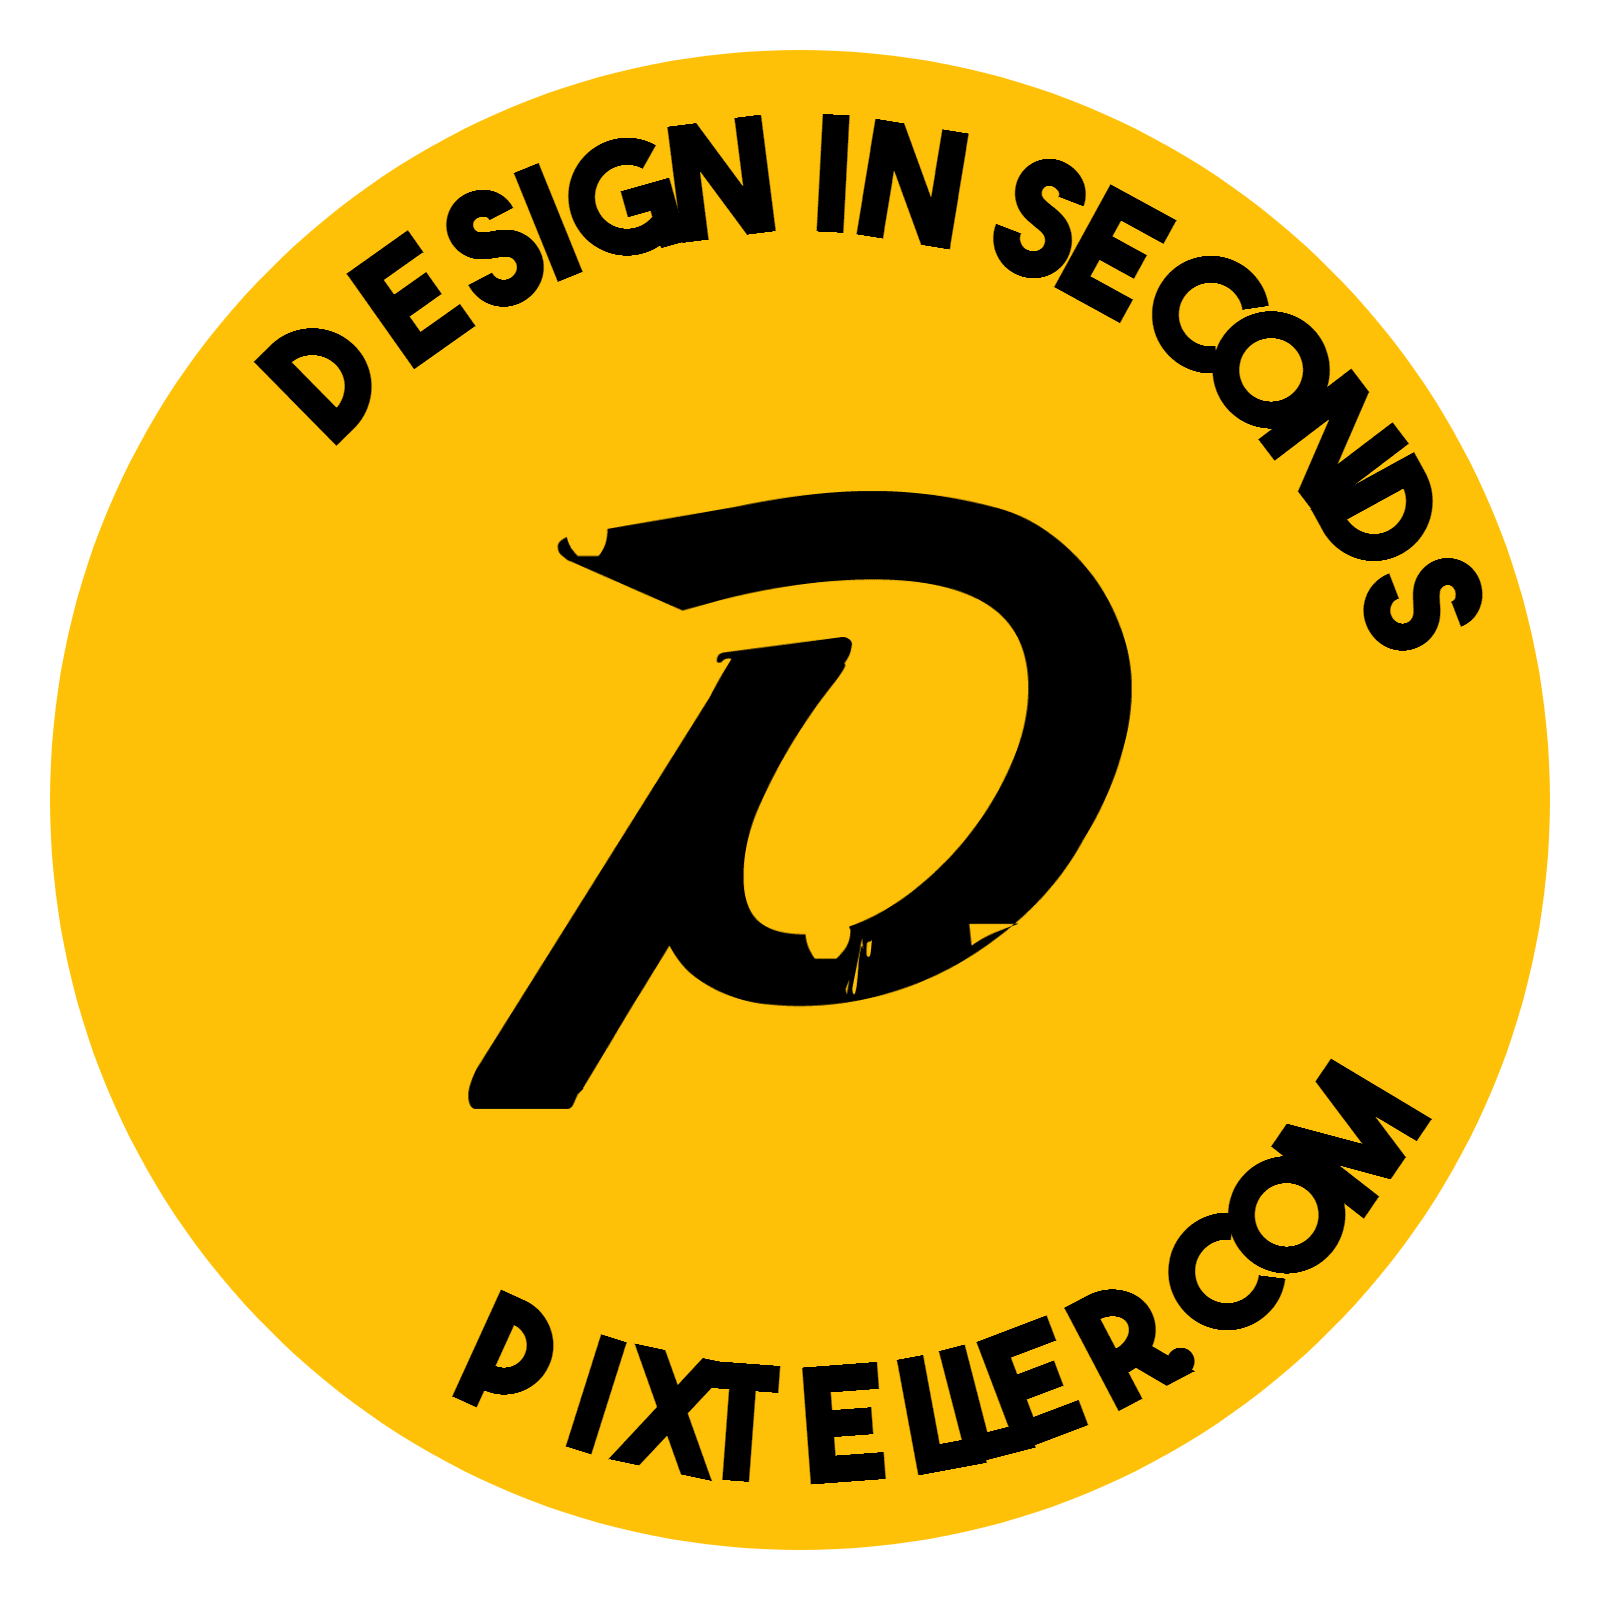 TShirst #PixTeller - George Buhnici Design 